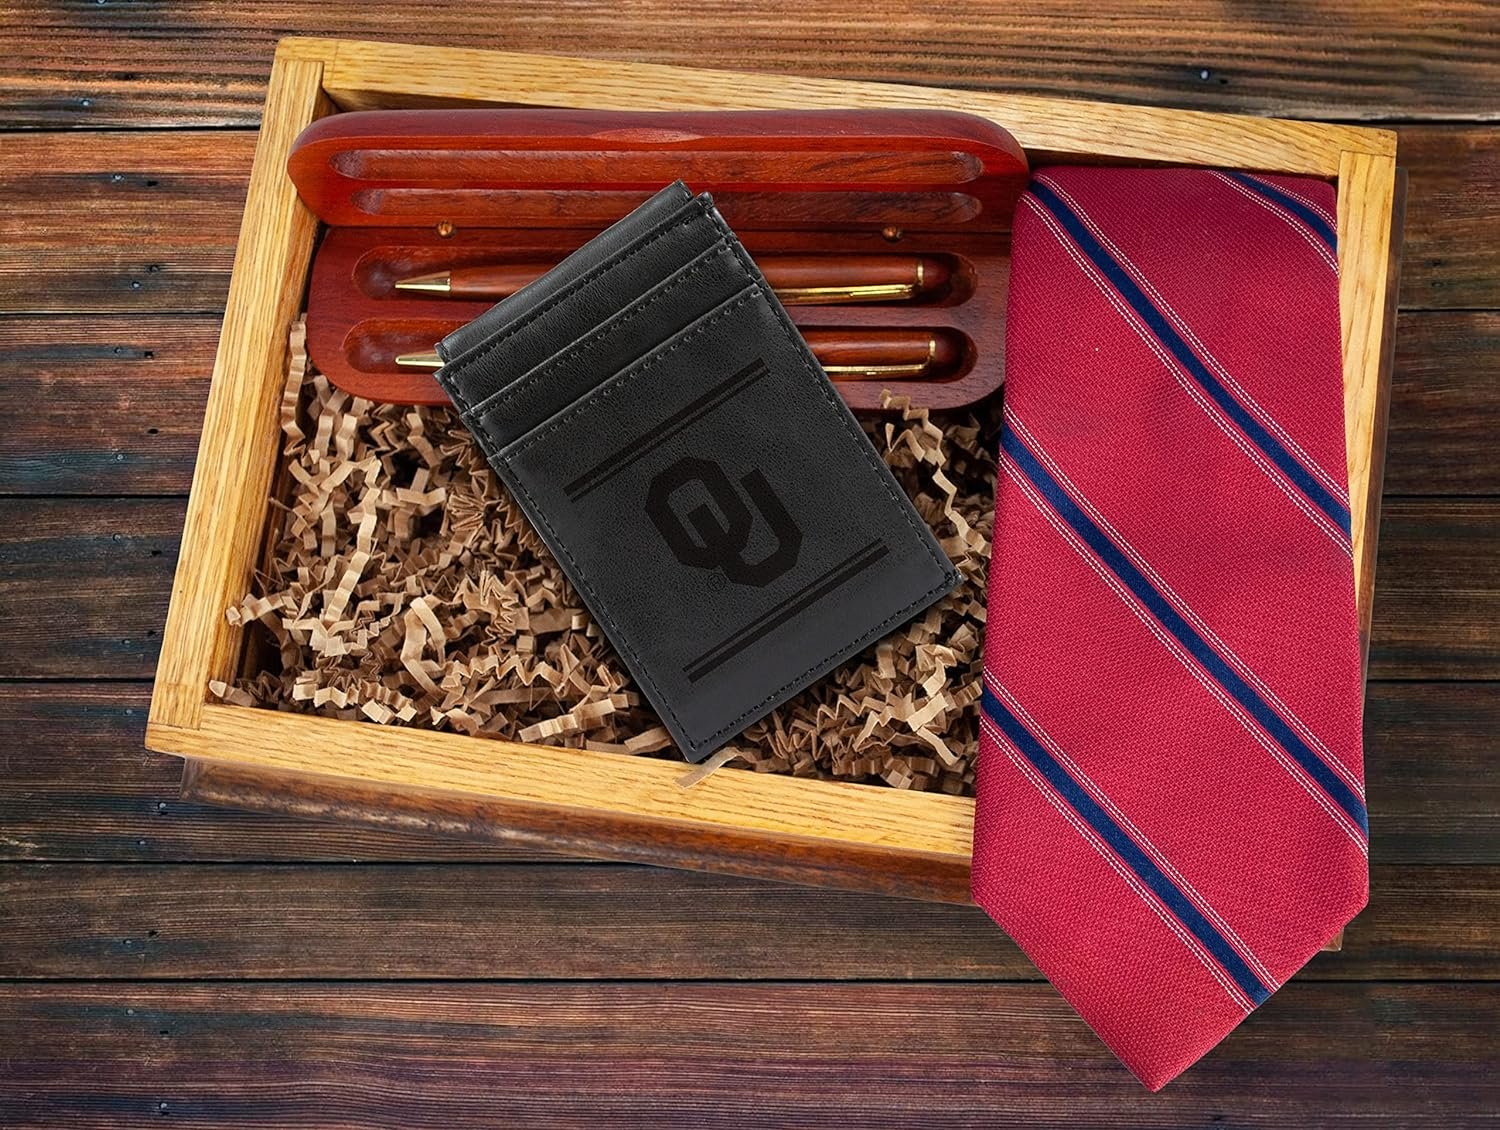 University of Oklahoma Sooners Premium Black Leather Wallet, Front Pocket Magnetic Money Clip, Laser Engraved, Vegan